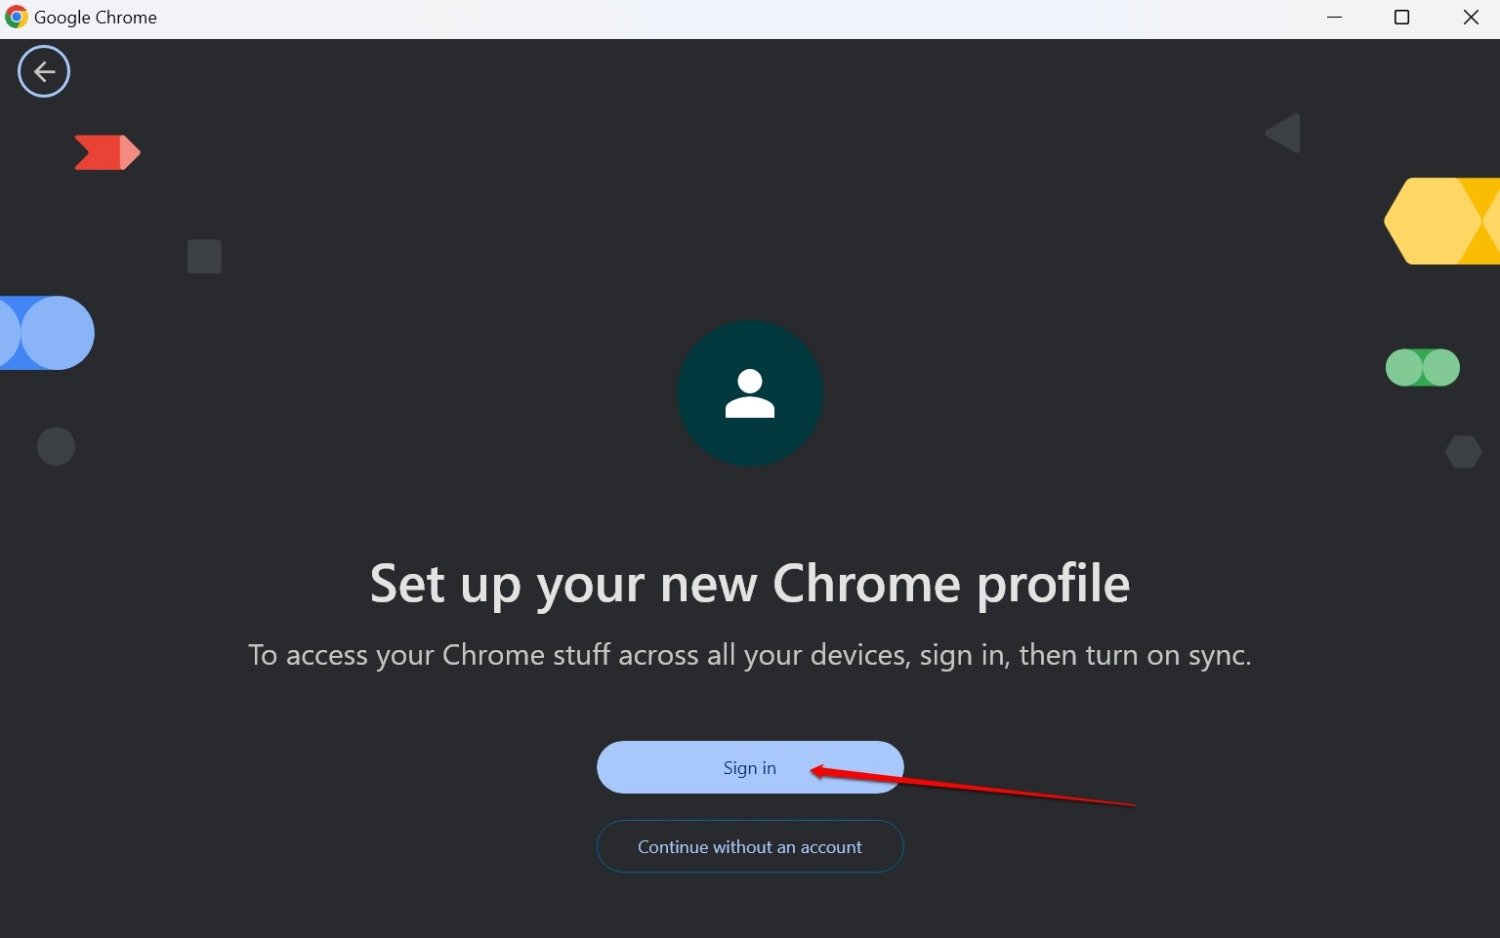 sign into new Chrome profile